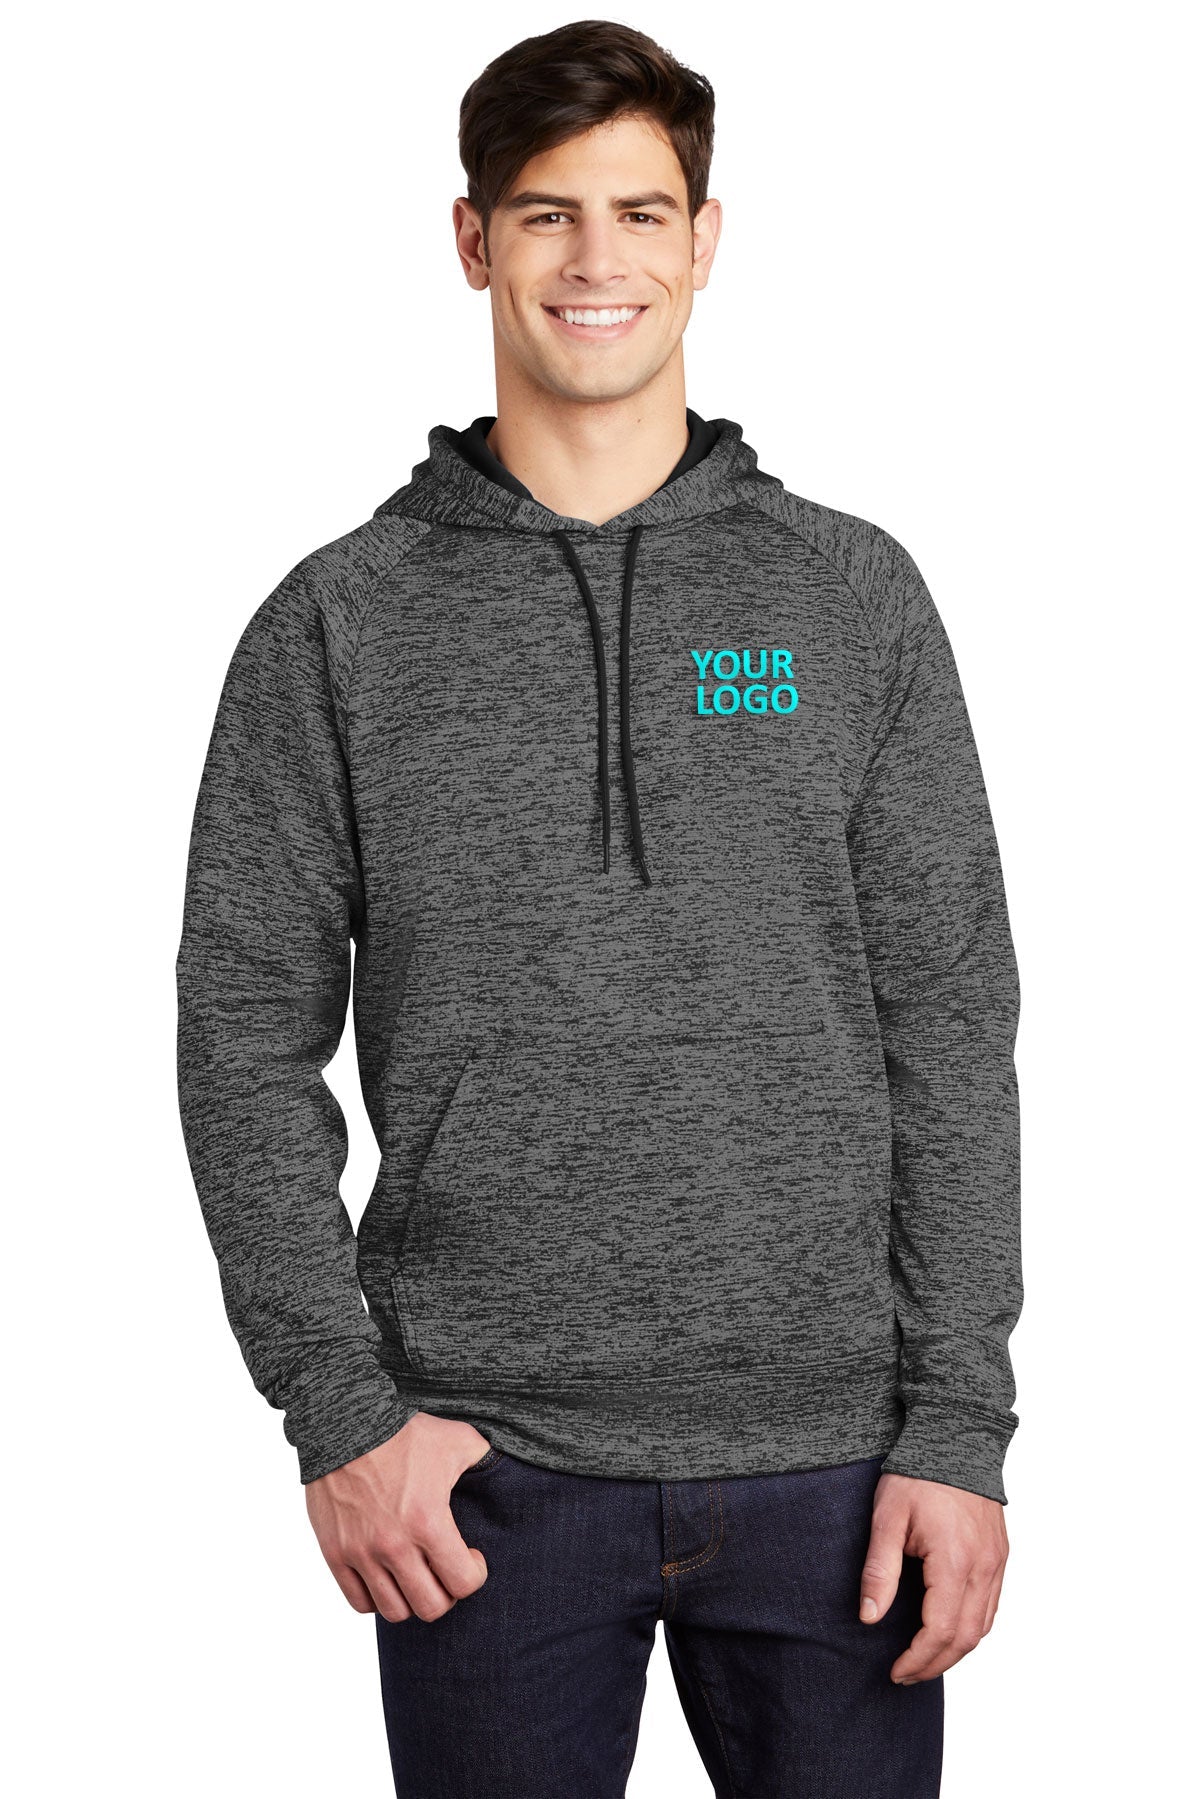 Sport-Tek Grey- Black Electric ST225 sweatshirts with company logo